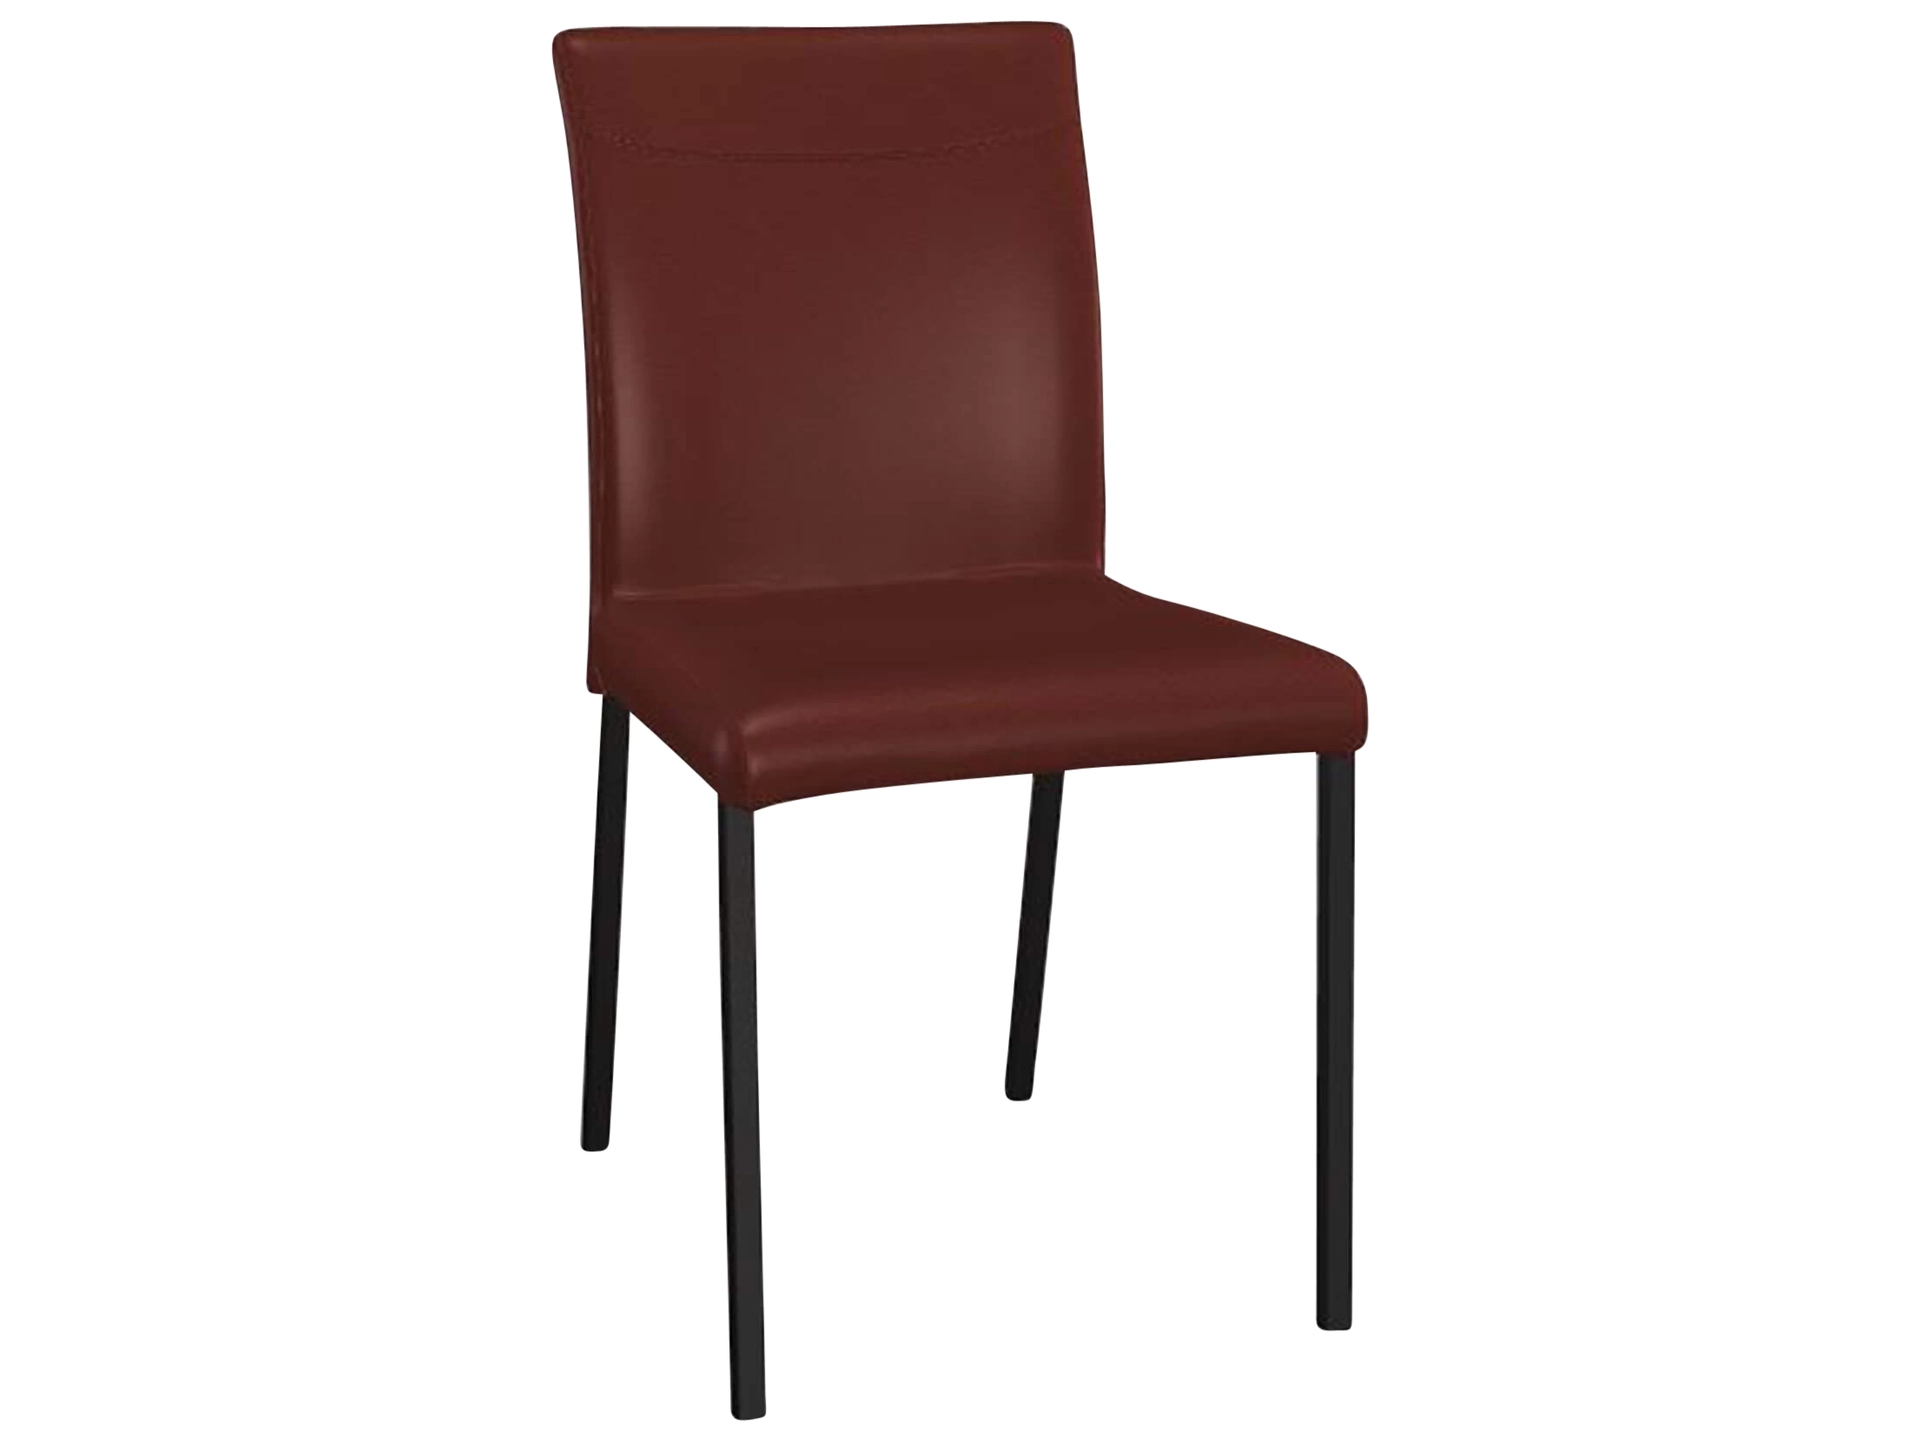 Stuhl Leicht Premium Trendstühle / Farbe: Cherry / Material: Leder